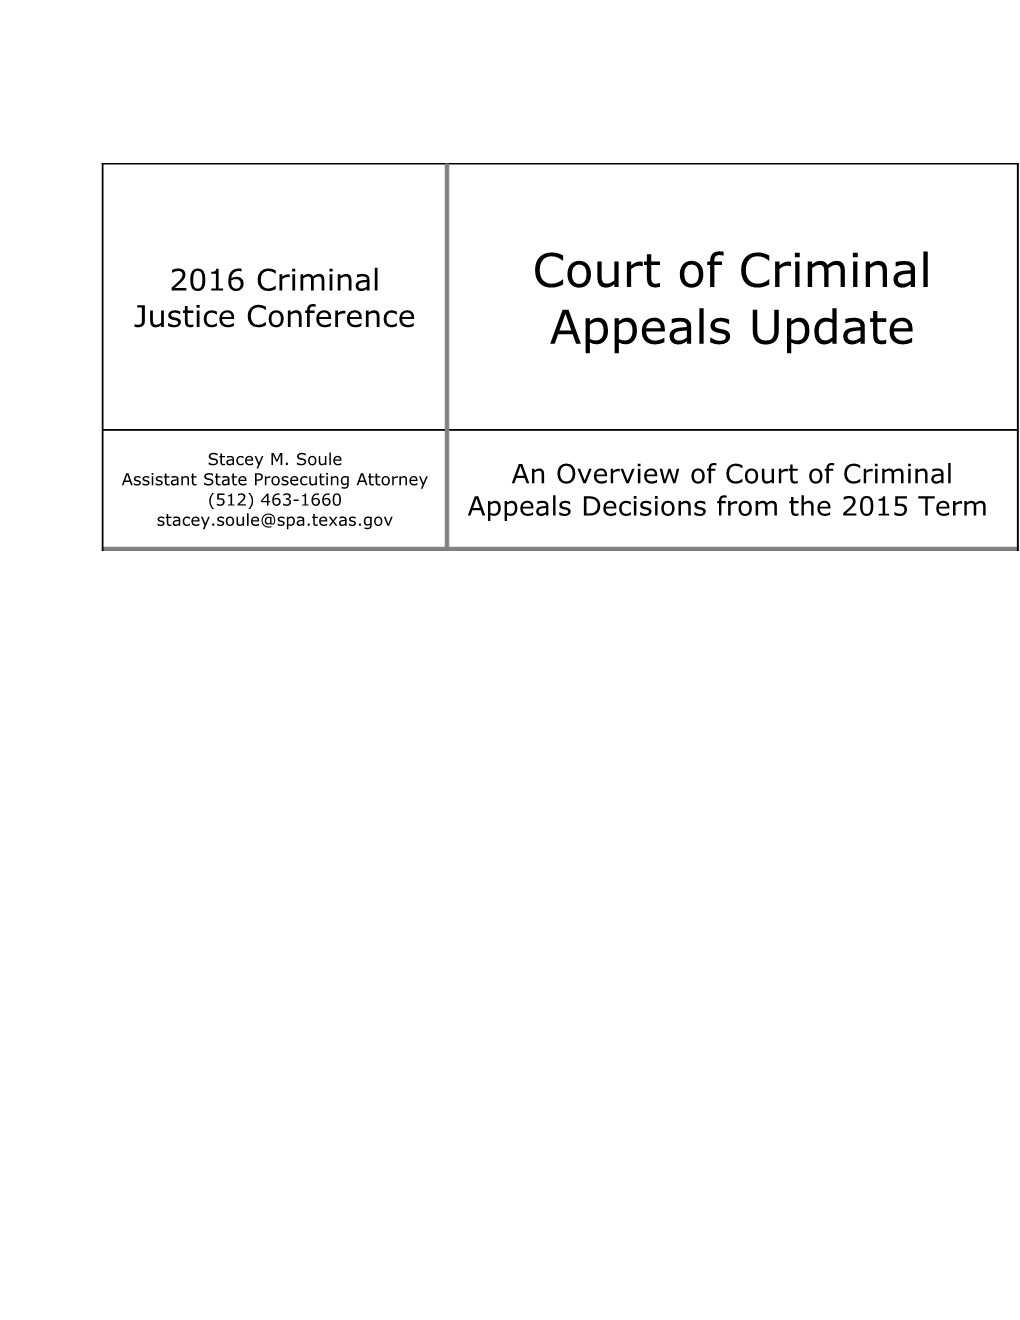 Court of Criminal Appeals Update